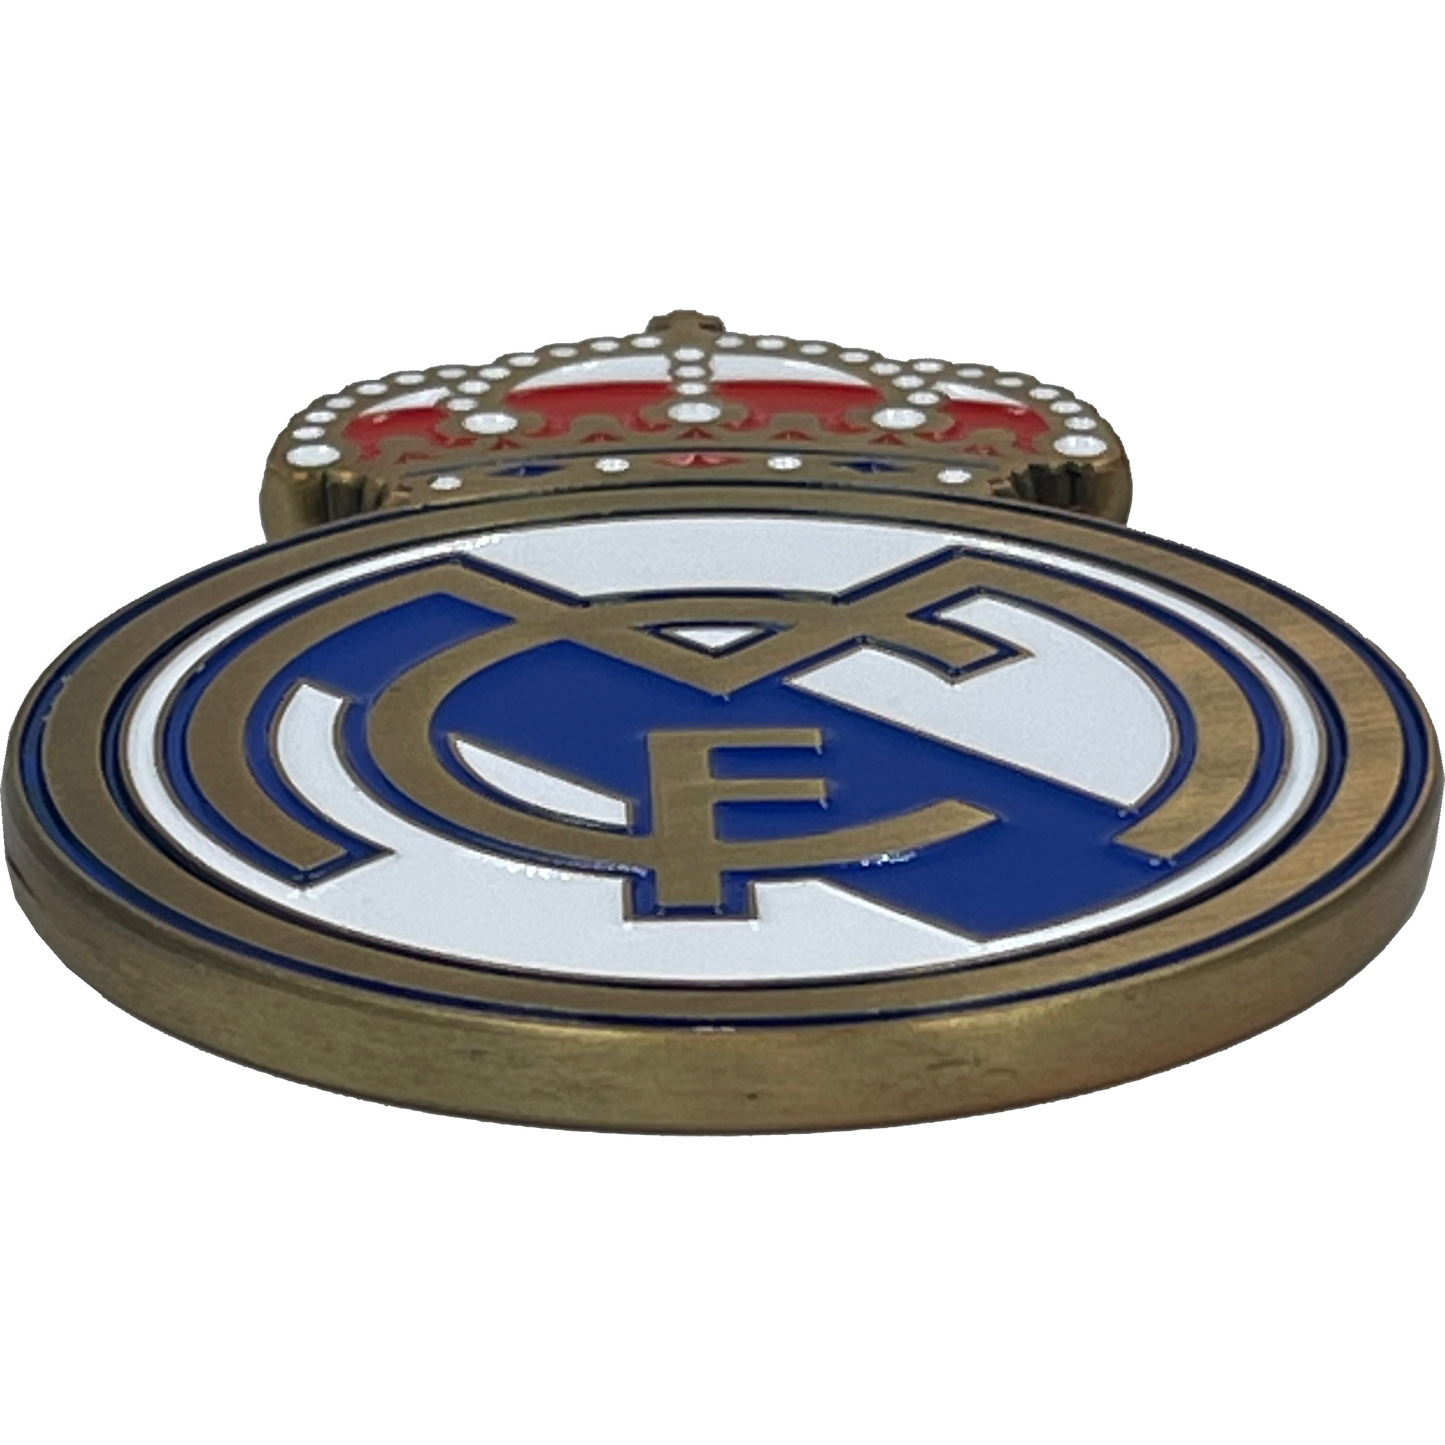 BL13-010 Real Madrid CF Futbol Soccer Policia Municipal Challenge Coin